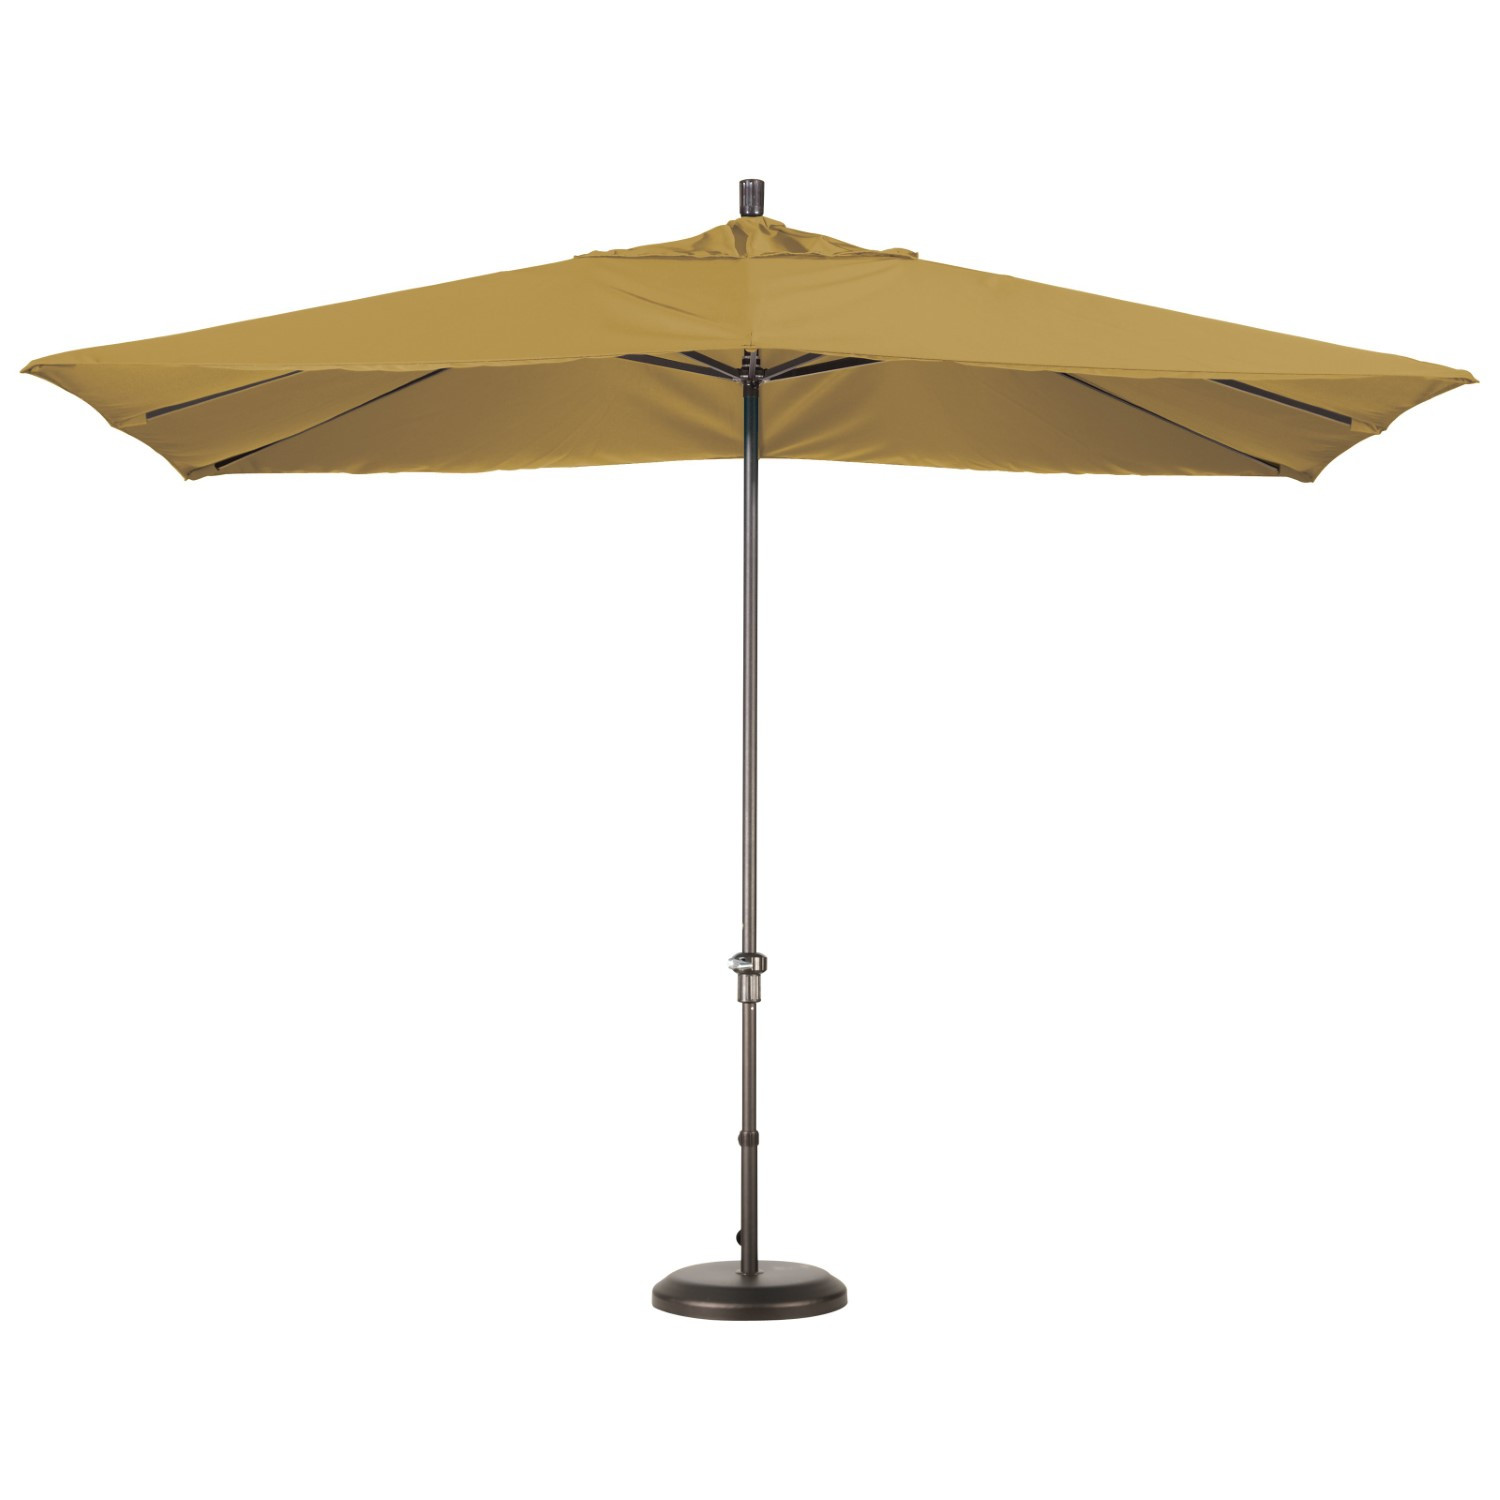 Best ideas about Rectangle Patio Umbrella
. Save or Pin California Umbrella 11 ft Rectangular Aluminum Market Now.